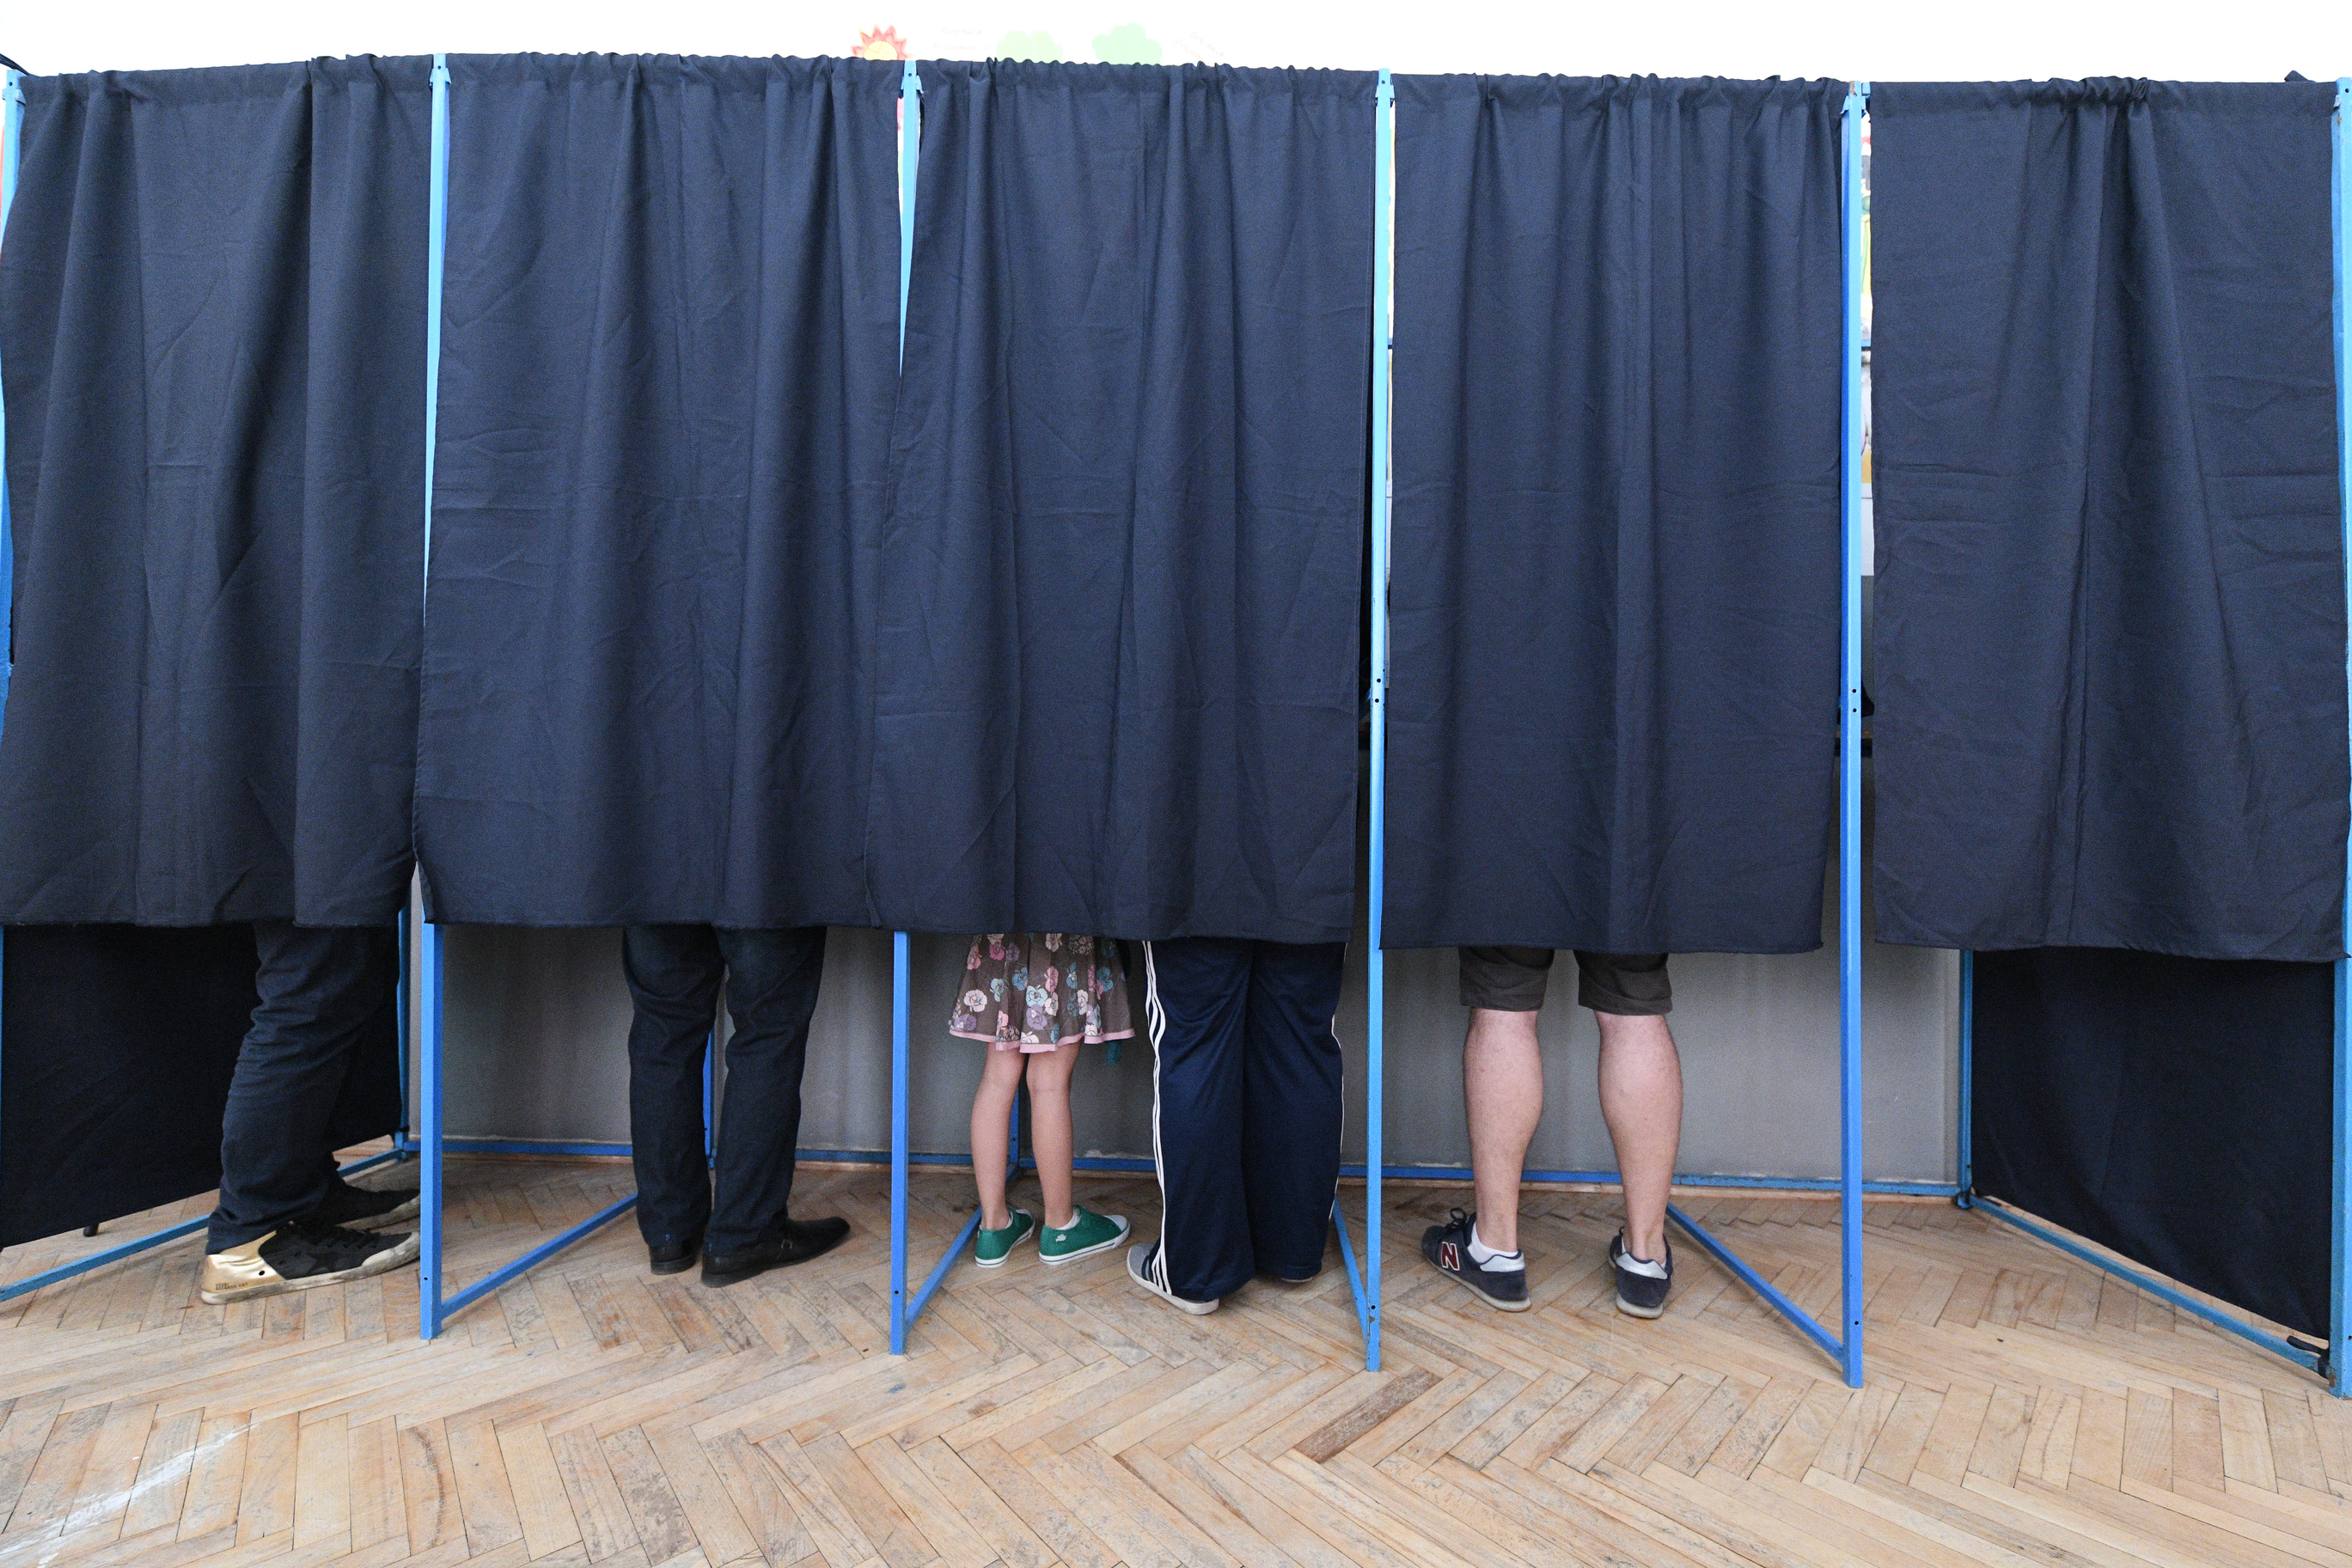 Romania’s Electoral Bureau publishes final list of candidates for European Parliament elections